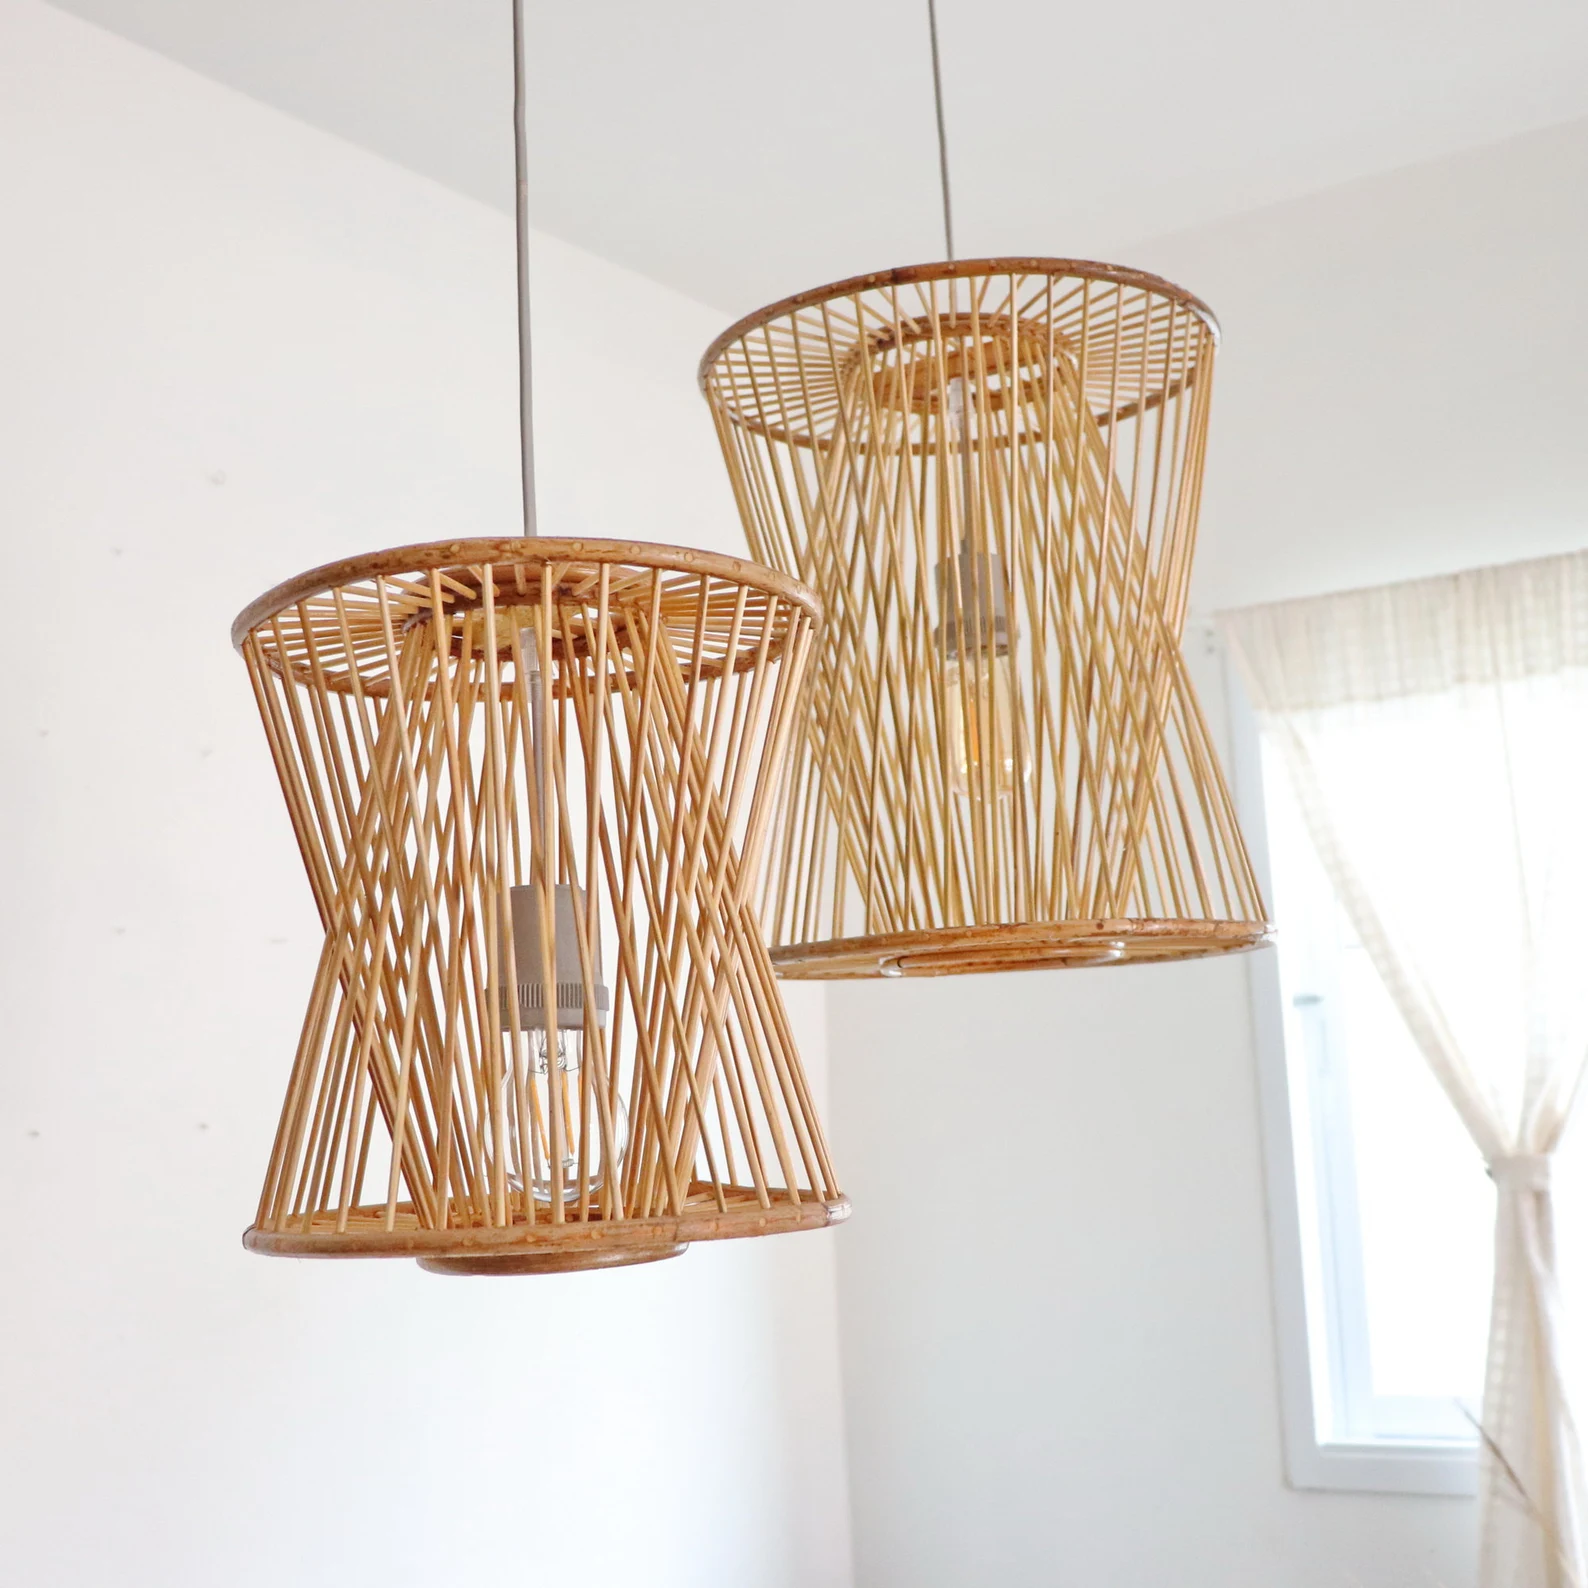 Handwoven Wicker Bamboo Lamp Basket Pendant lighting